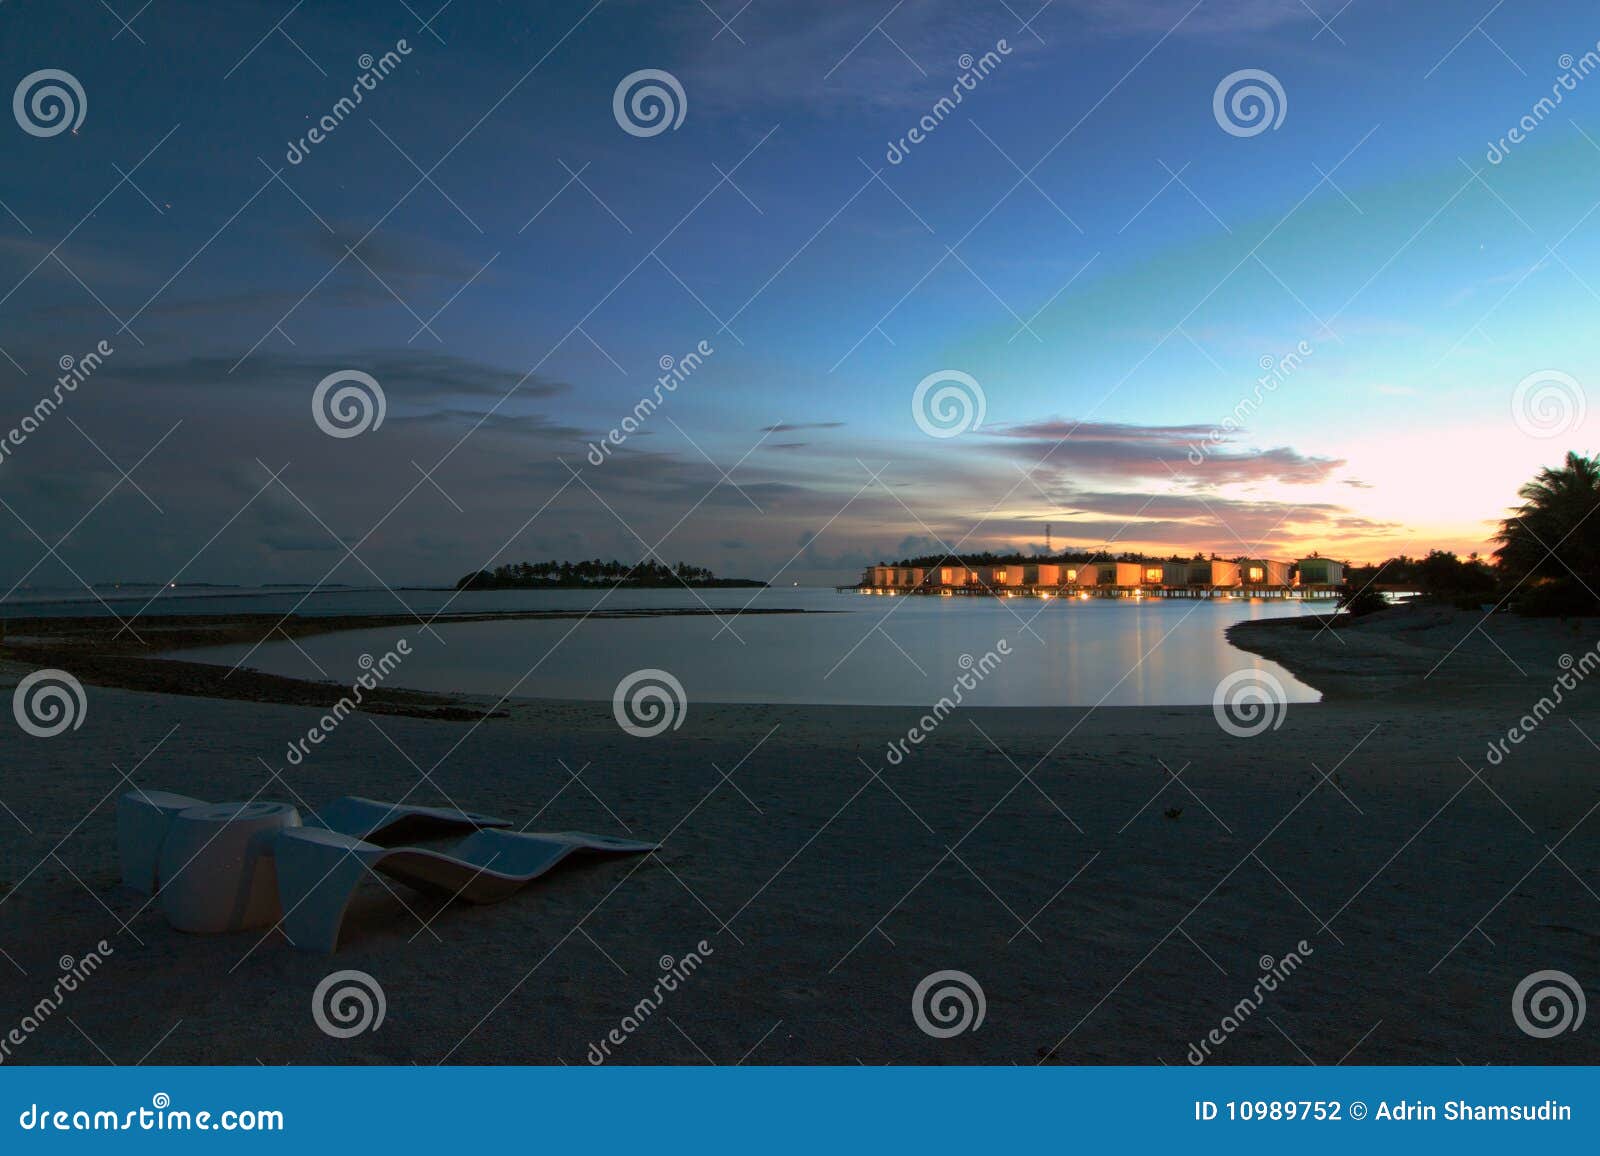 sunset over water villas